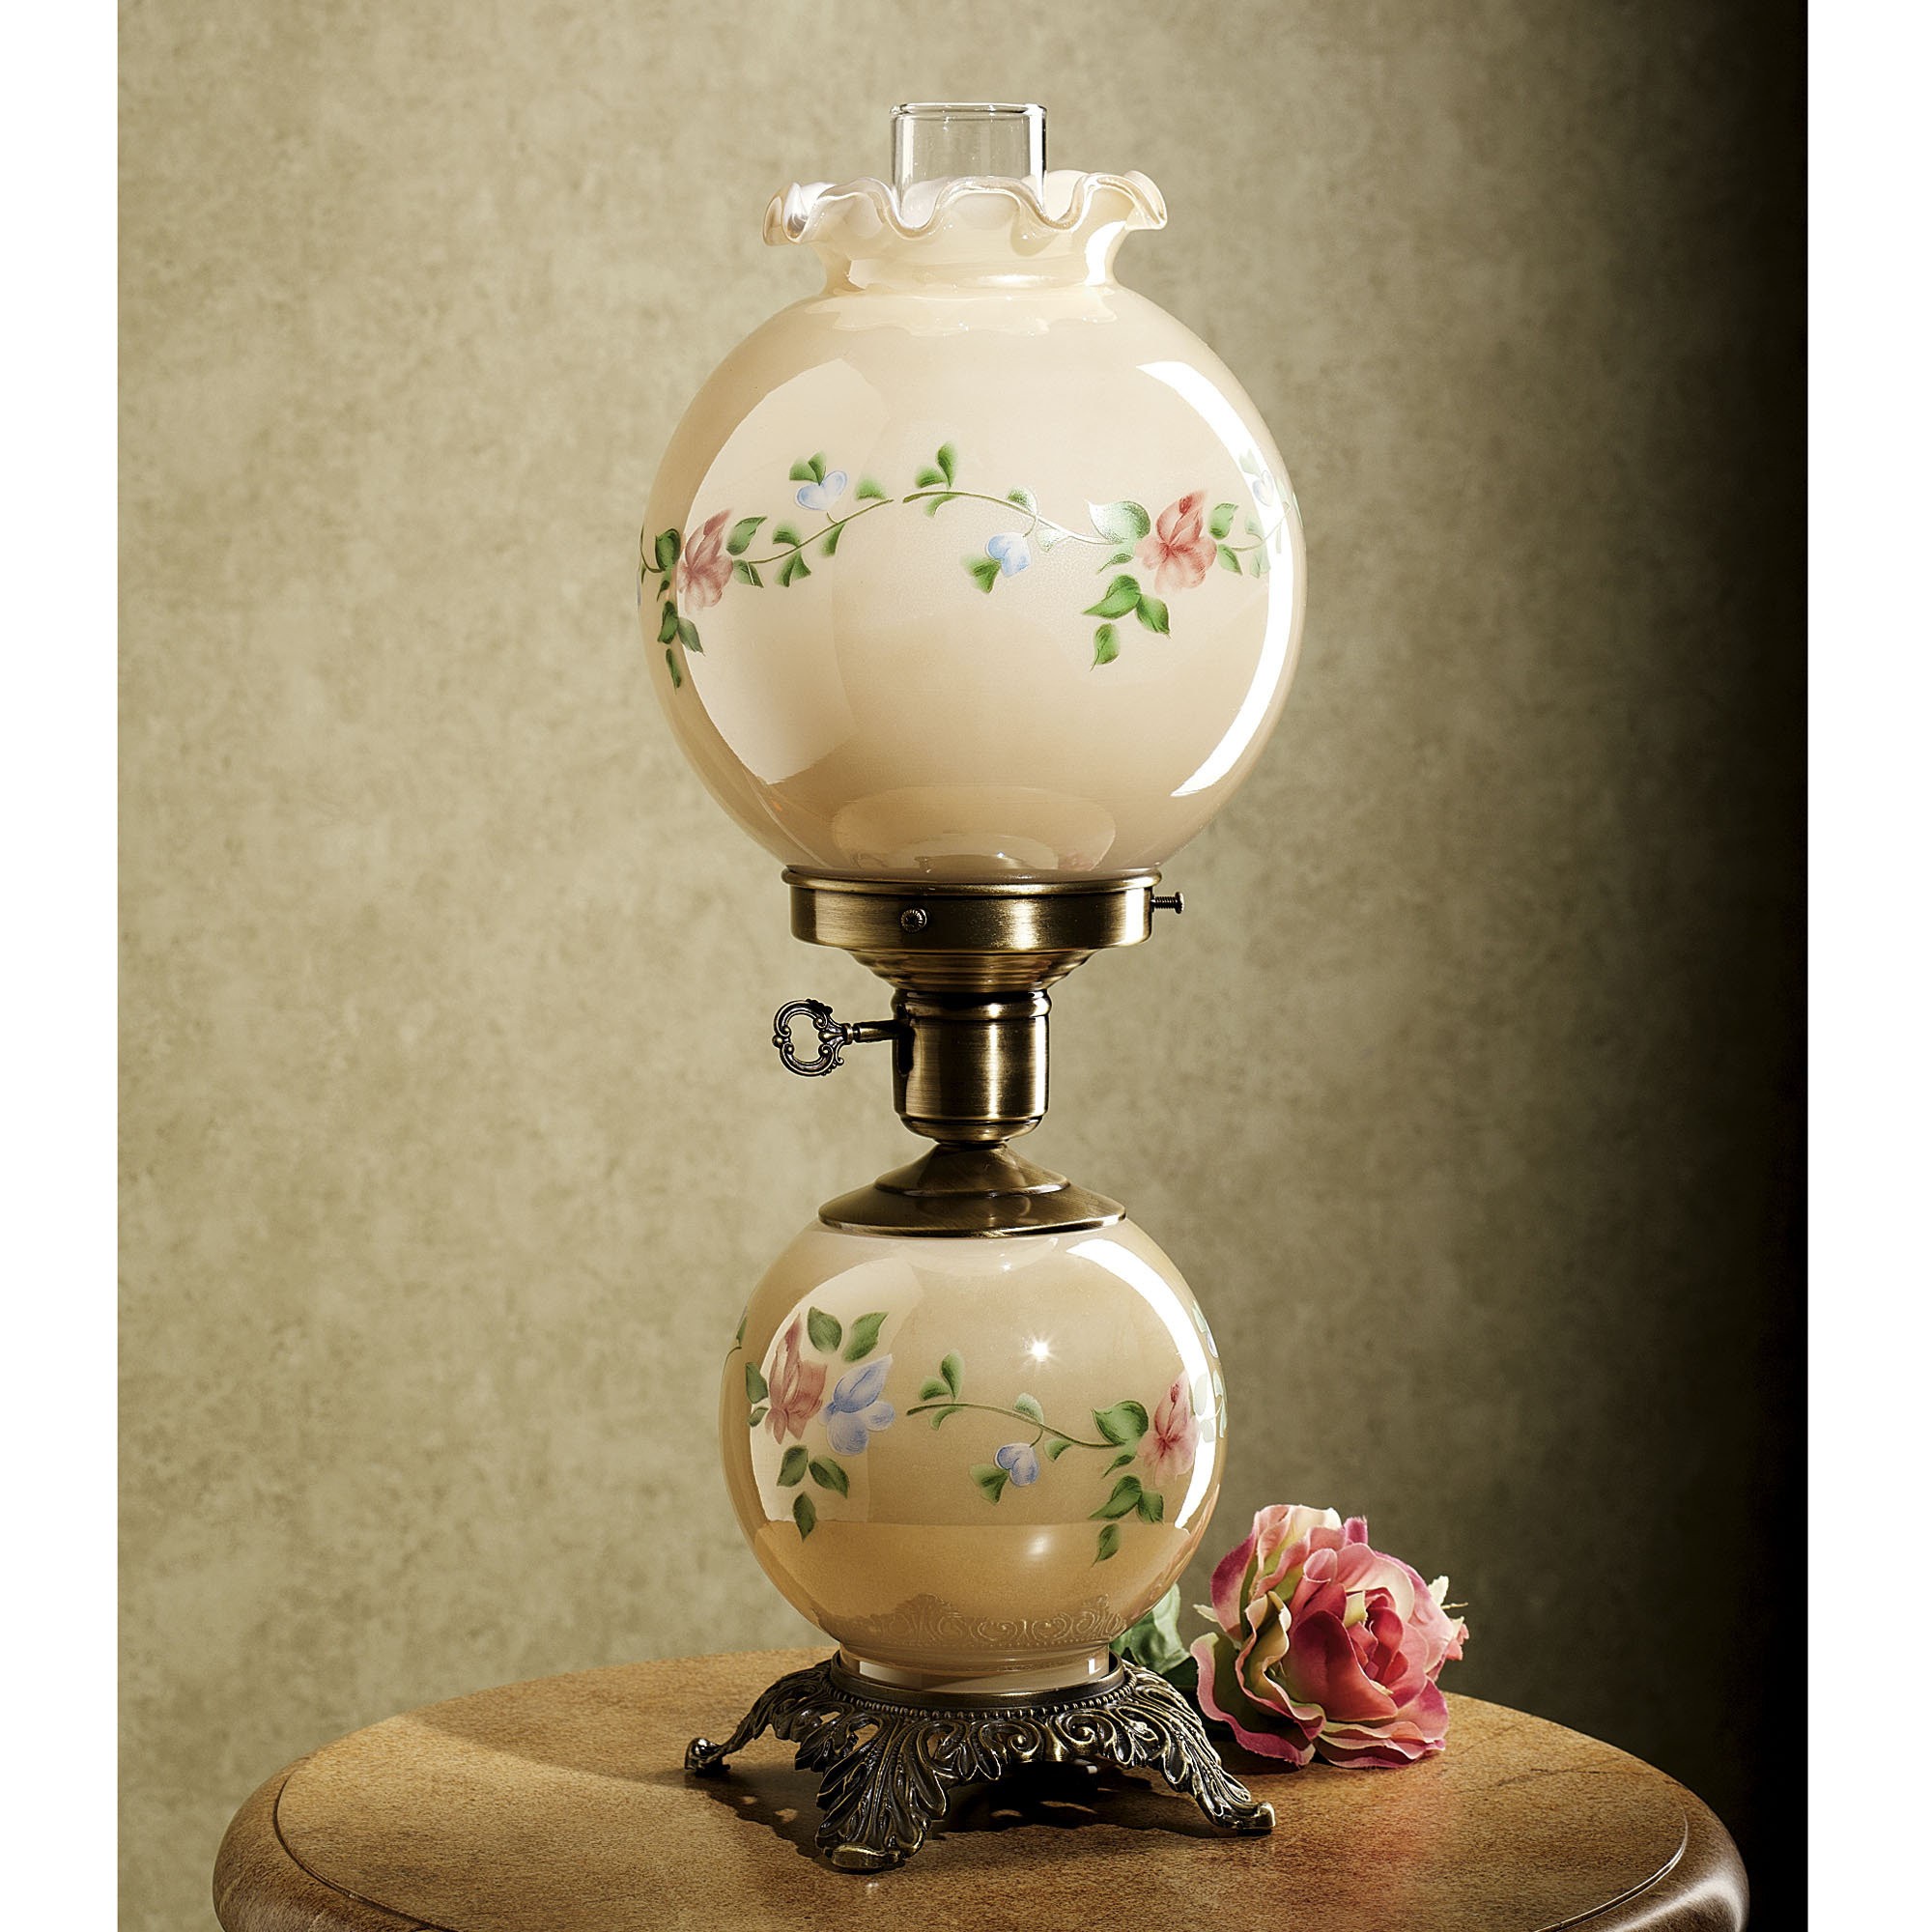 10 benefits of antique globe lamps warisan lighting 1